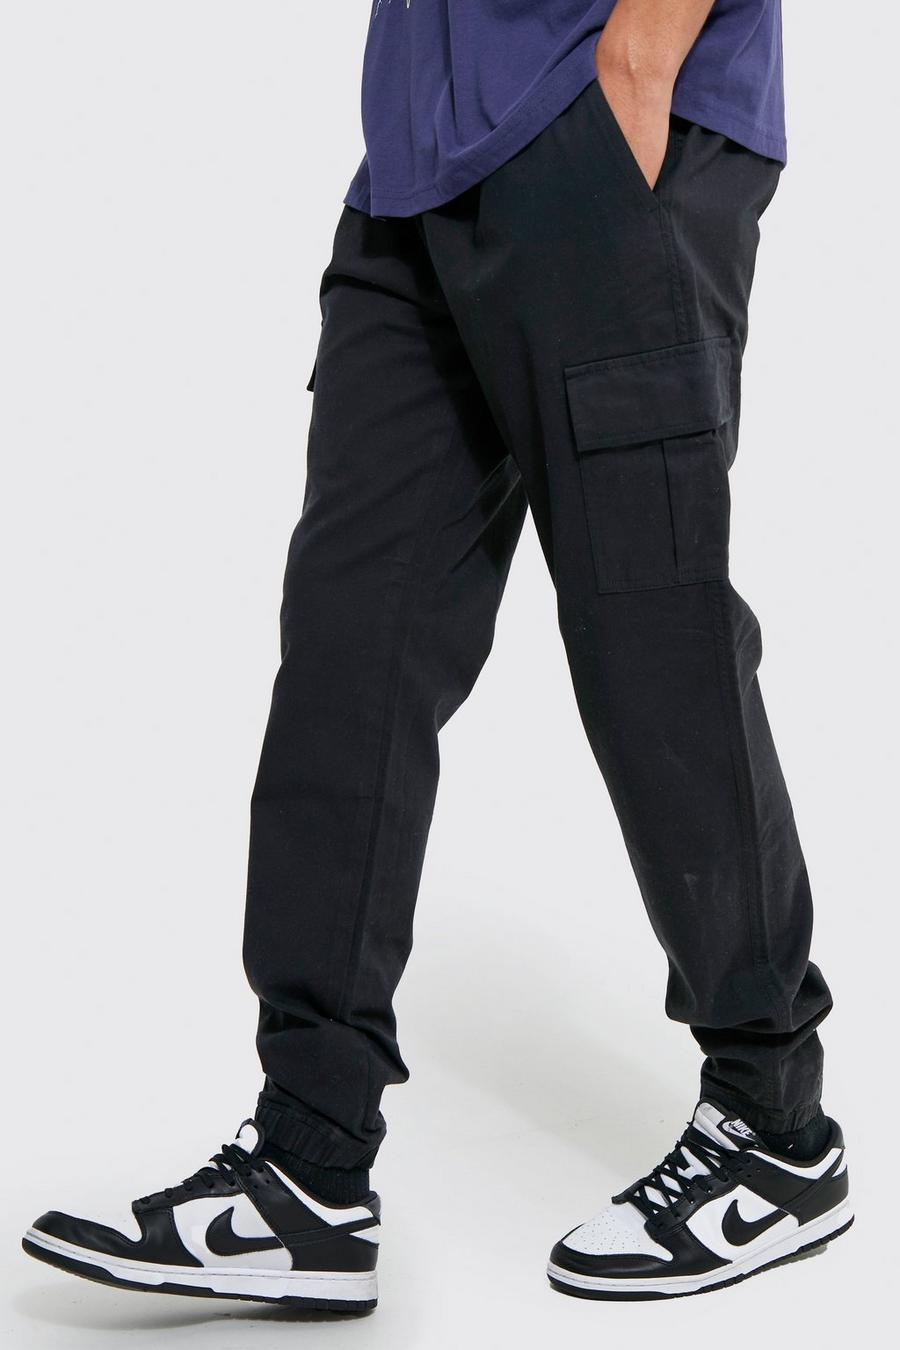 Pantalón Tall cargo ajustado, Black negro